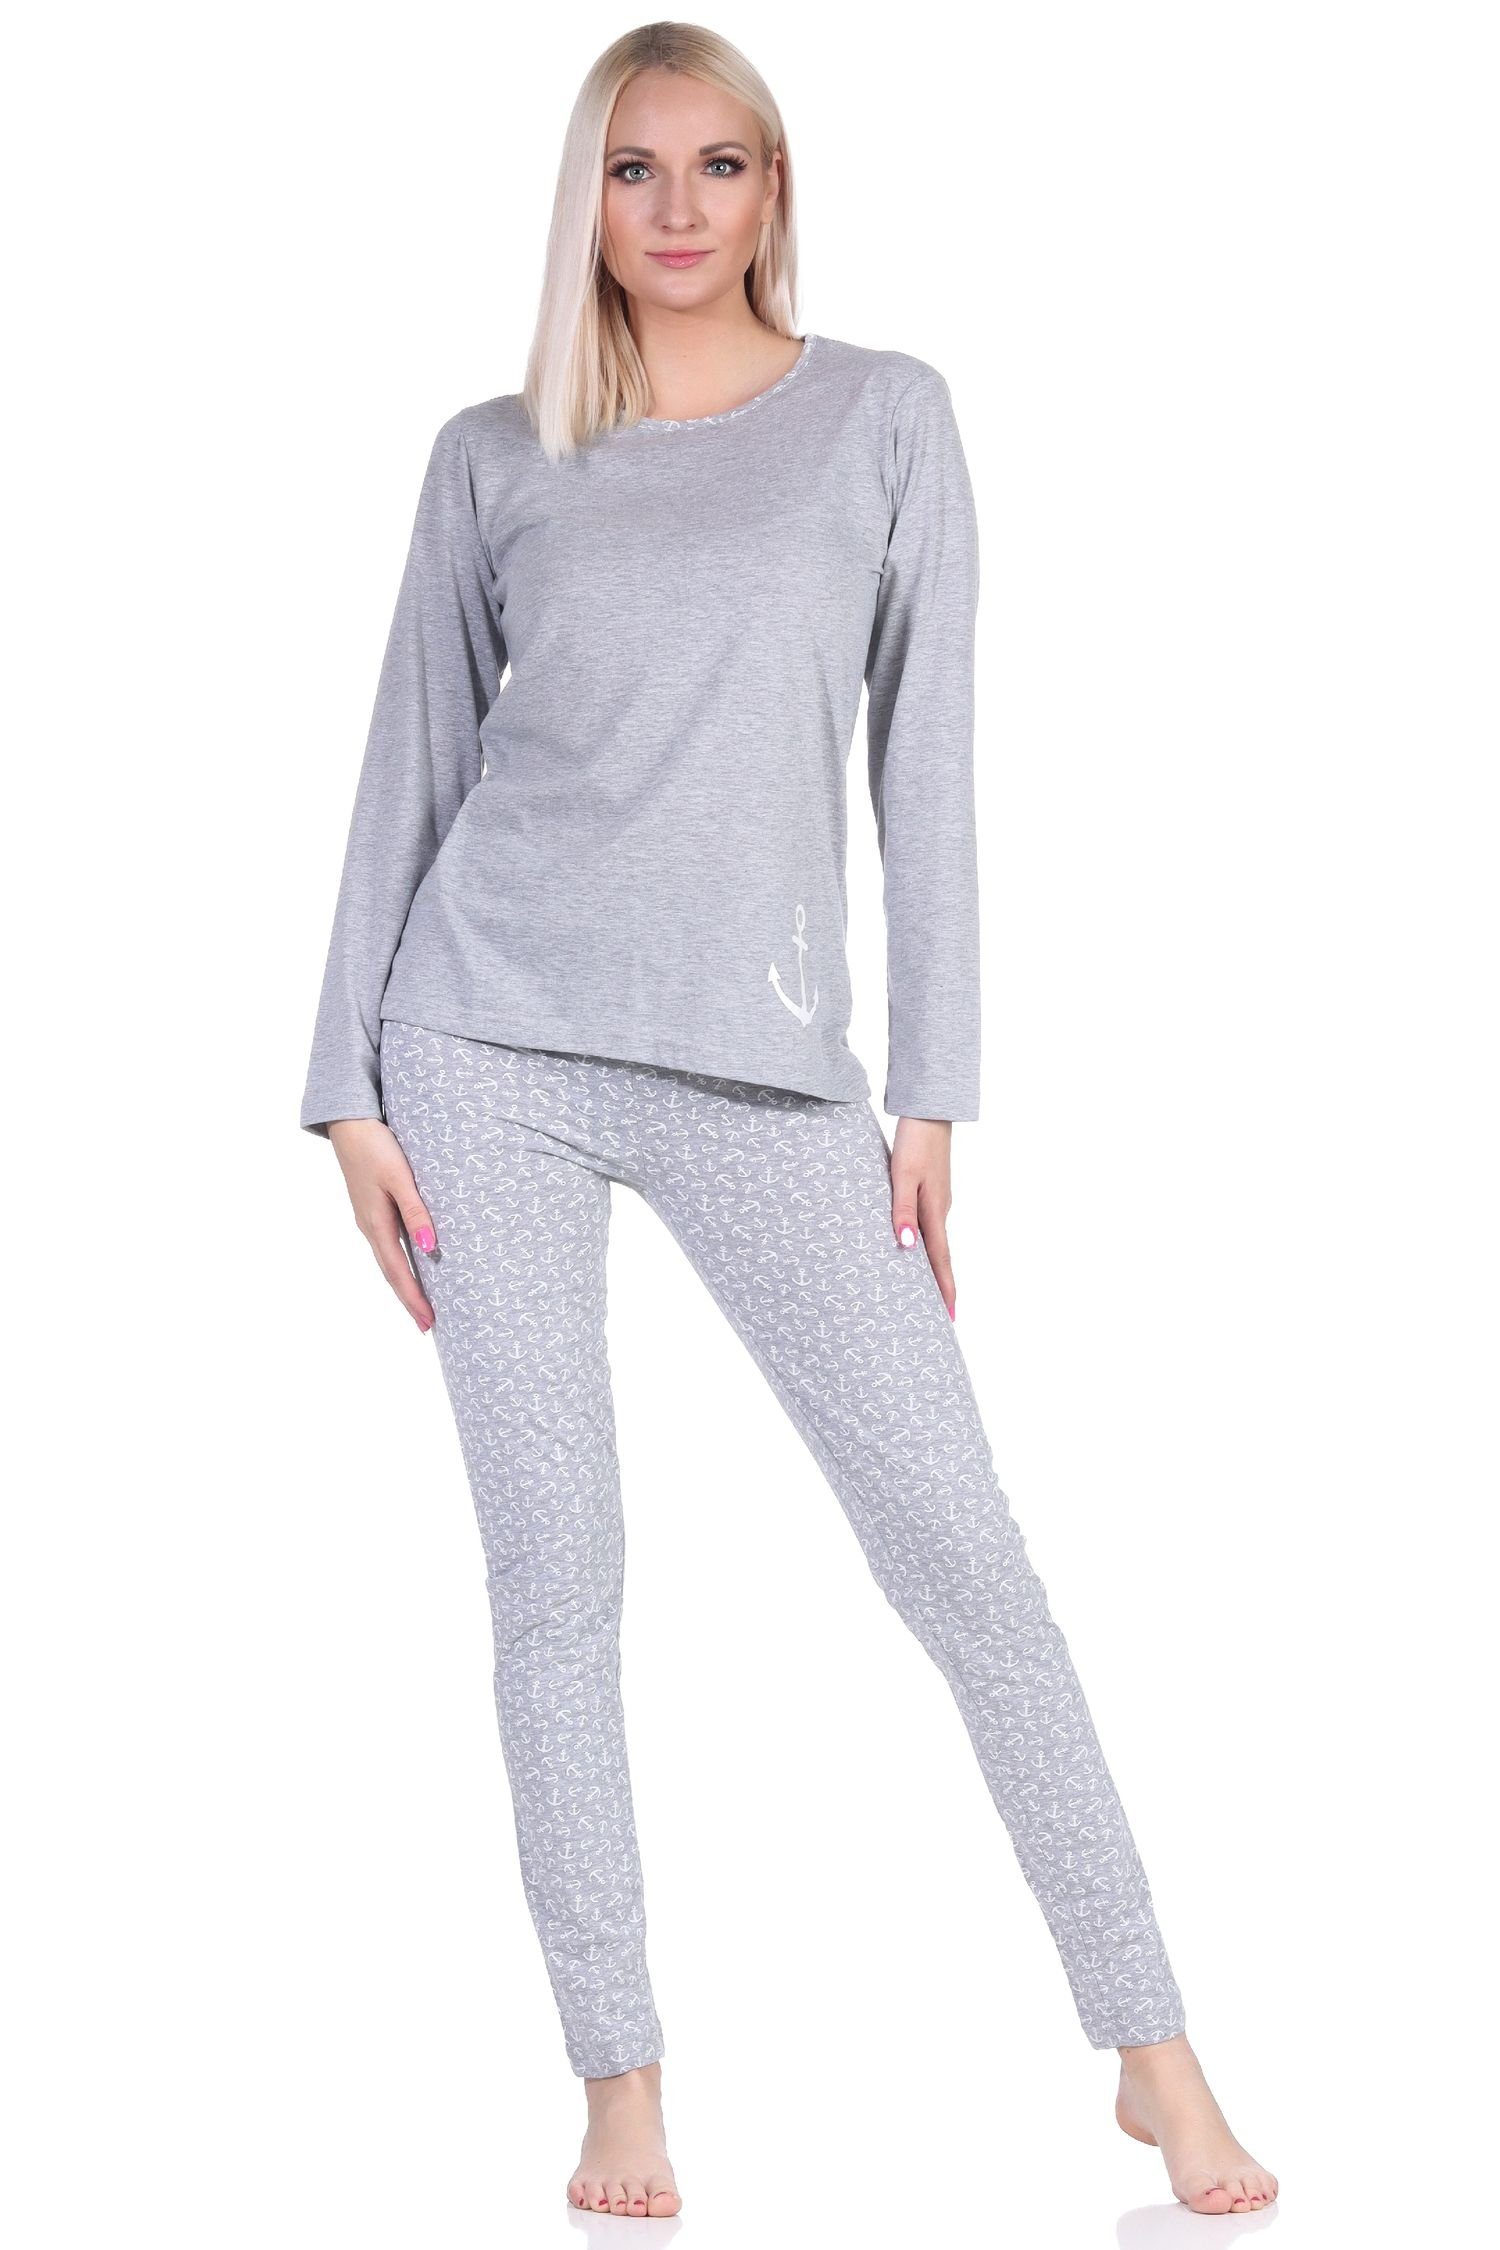 Wäsche/Bademode Pyjamas RELAX by Normann Pyjama Damen langarm Schlafanzug Pyjama in zeitlosem maritimen Look - 112 201 10 712